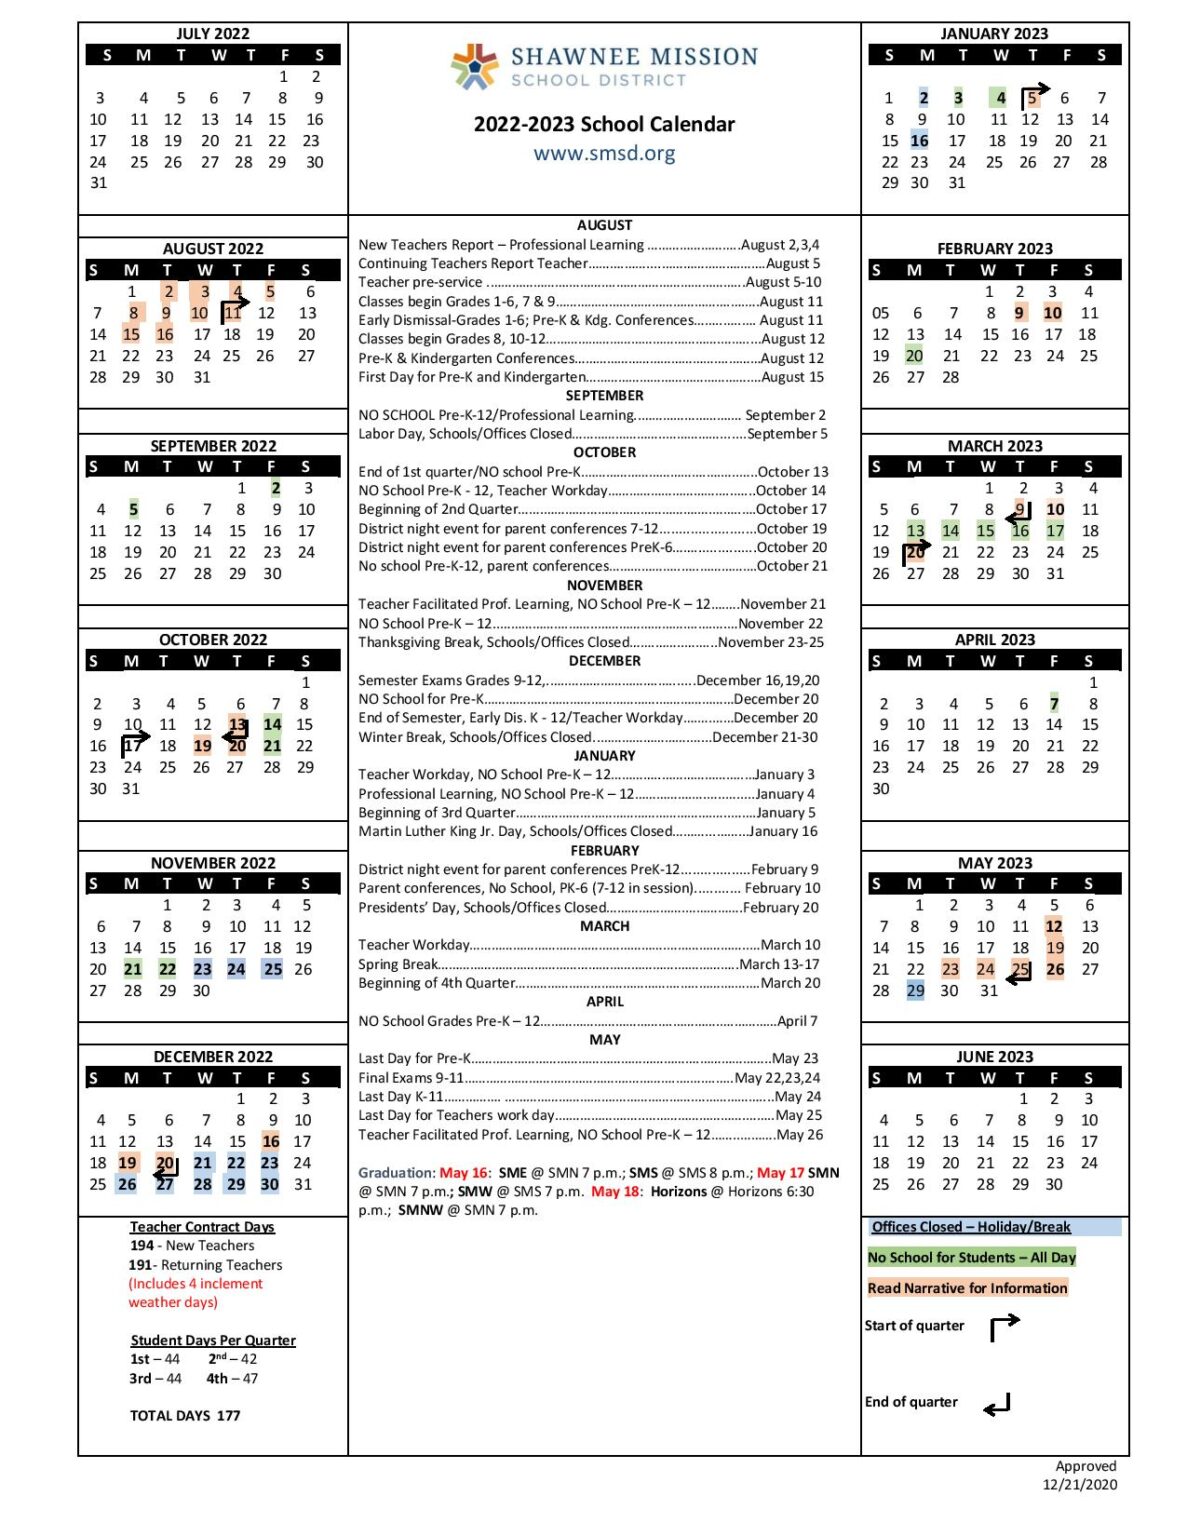 Shawnee Mission School District Calendar 2022 2023